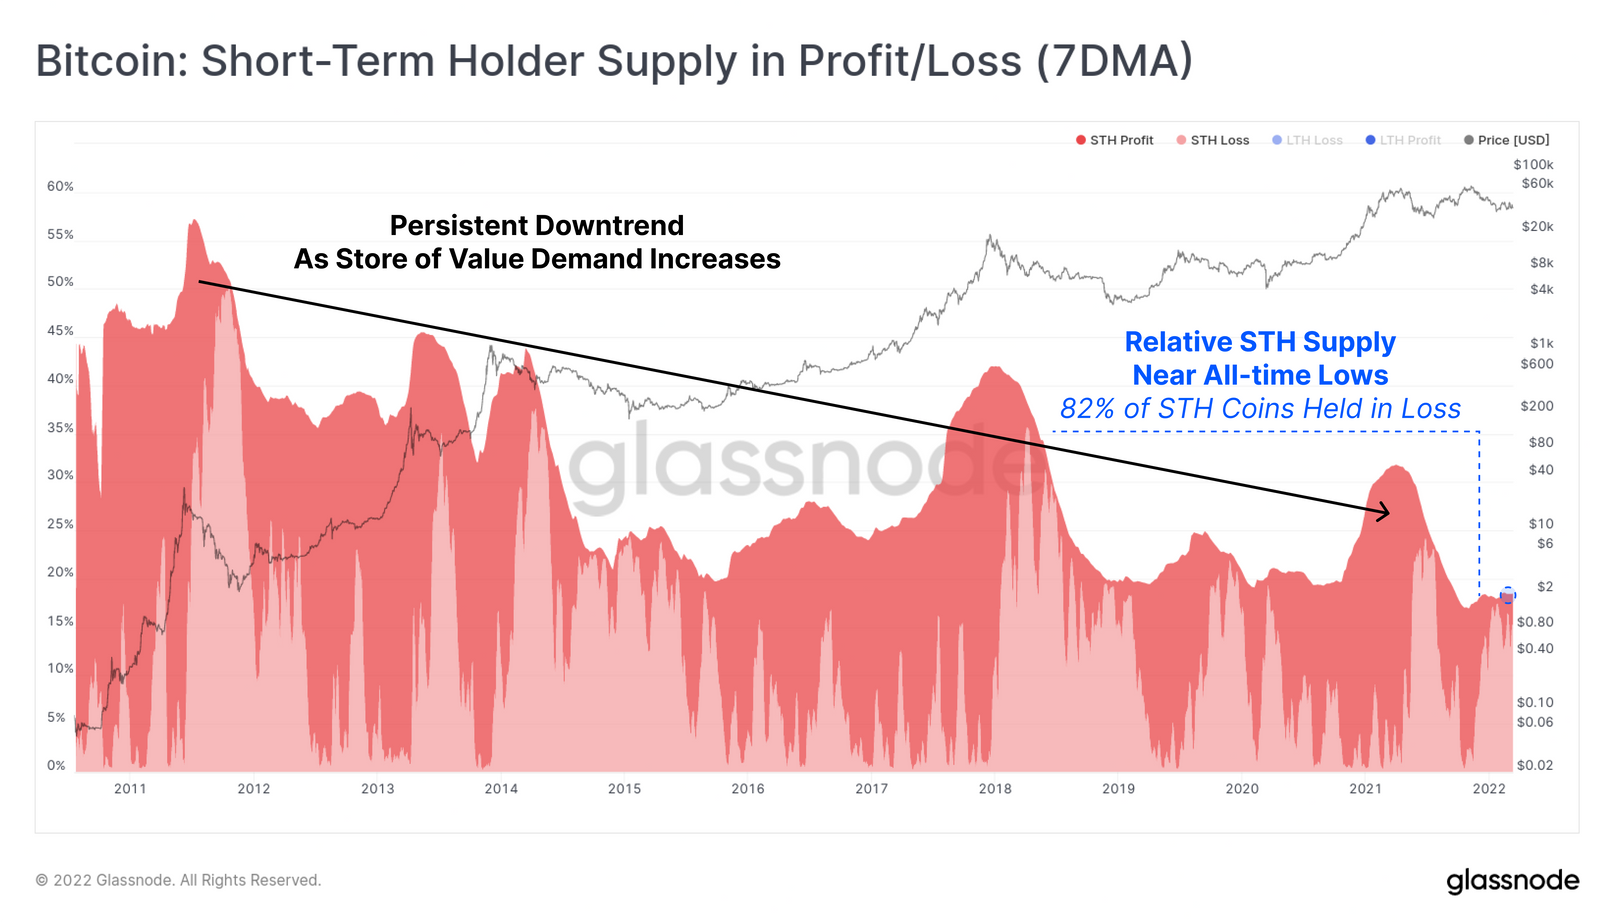 Short-term Bitcoin holder supply